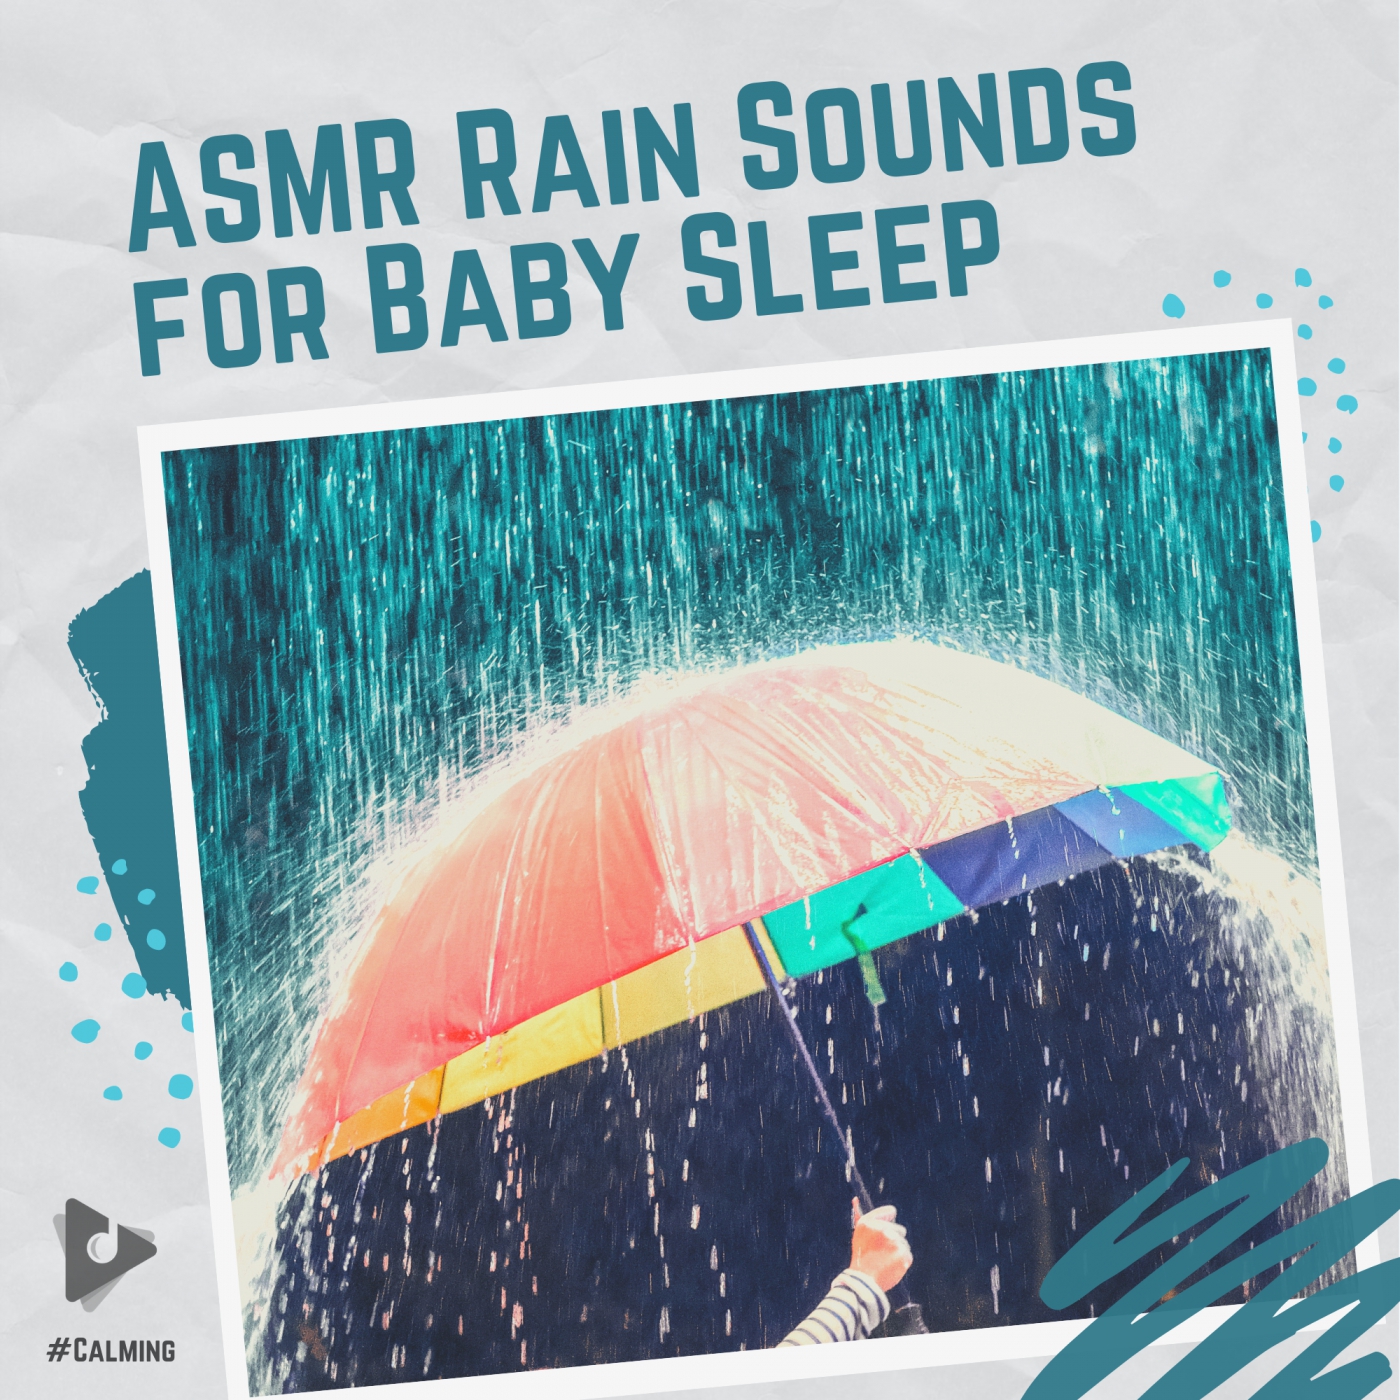 ASMR Rain Sounds for Baby Sleep